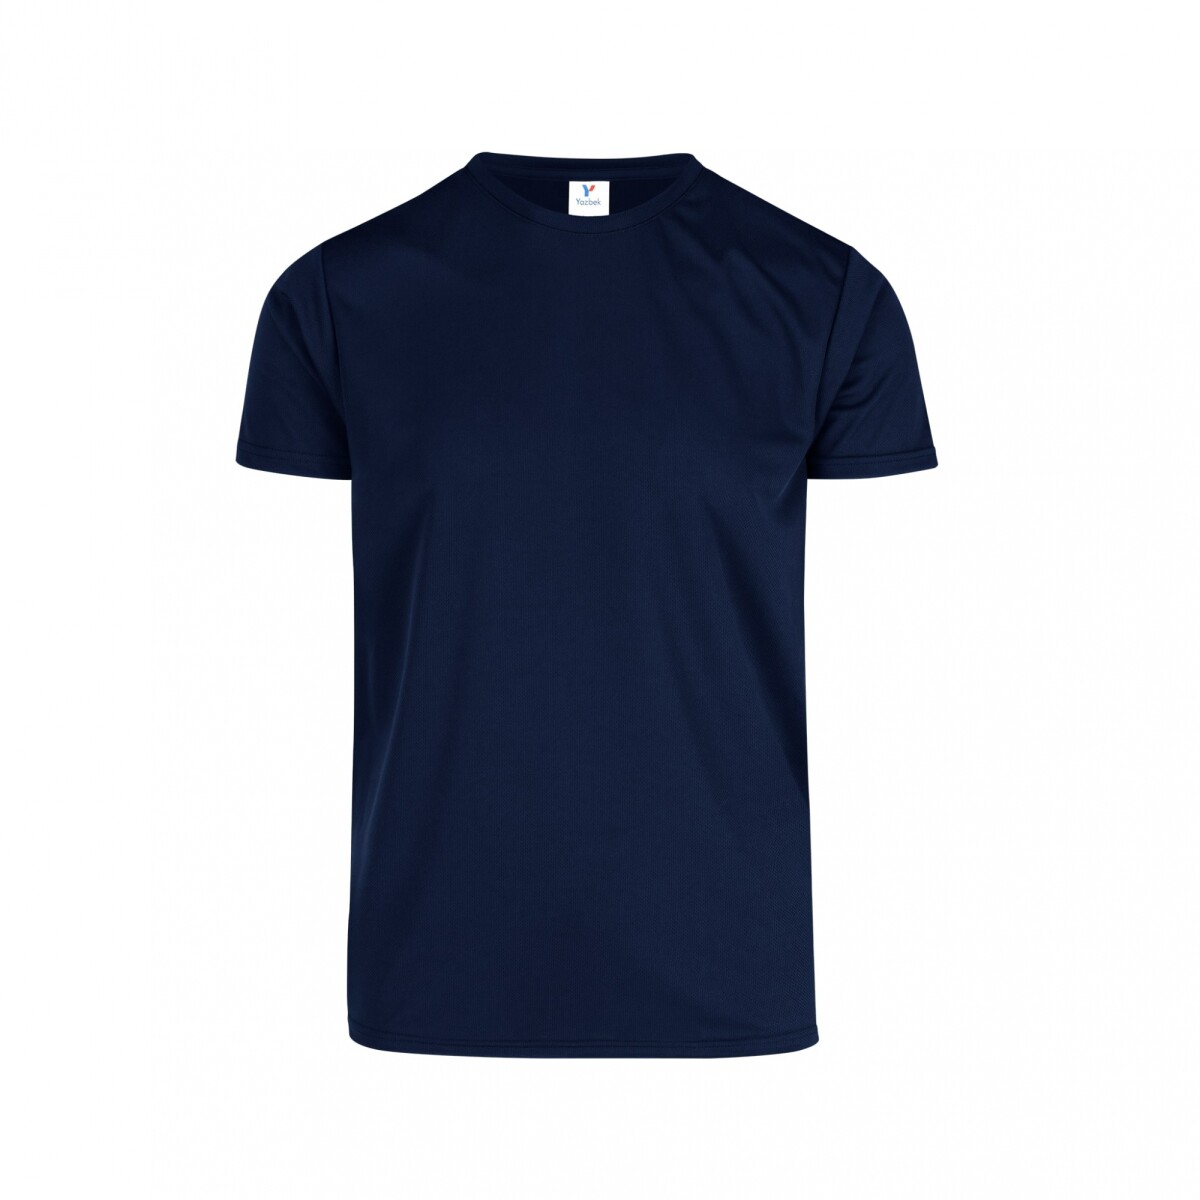 Camiseta a la base dry fit - Azul marino 